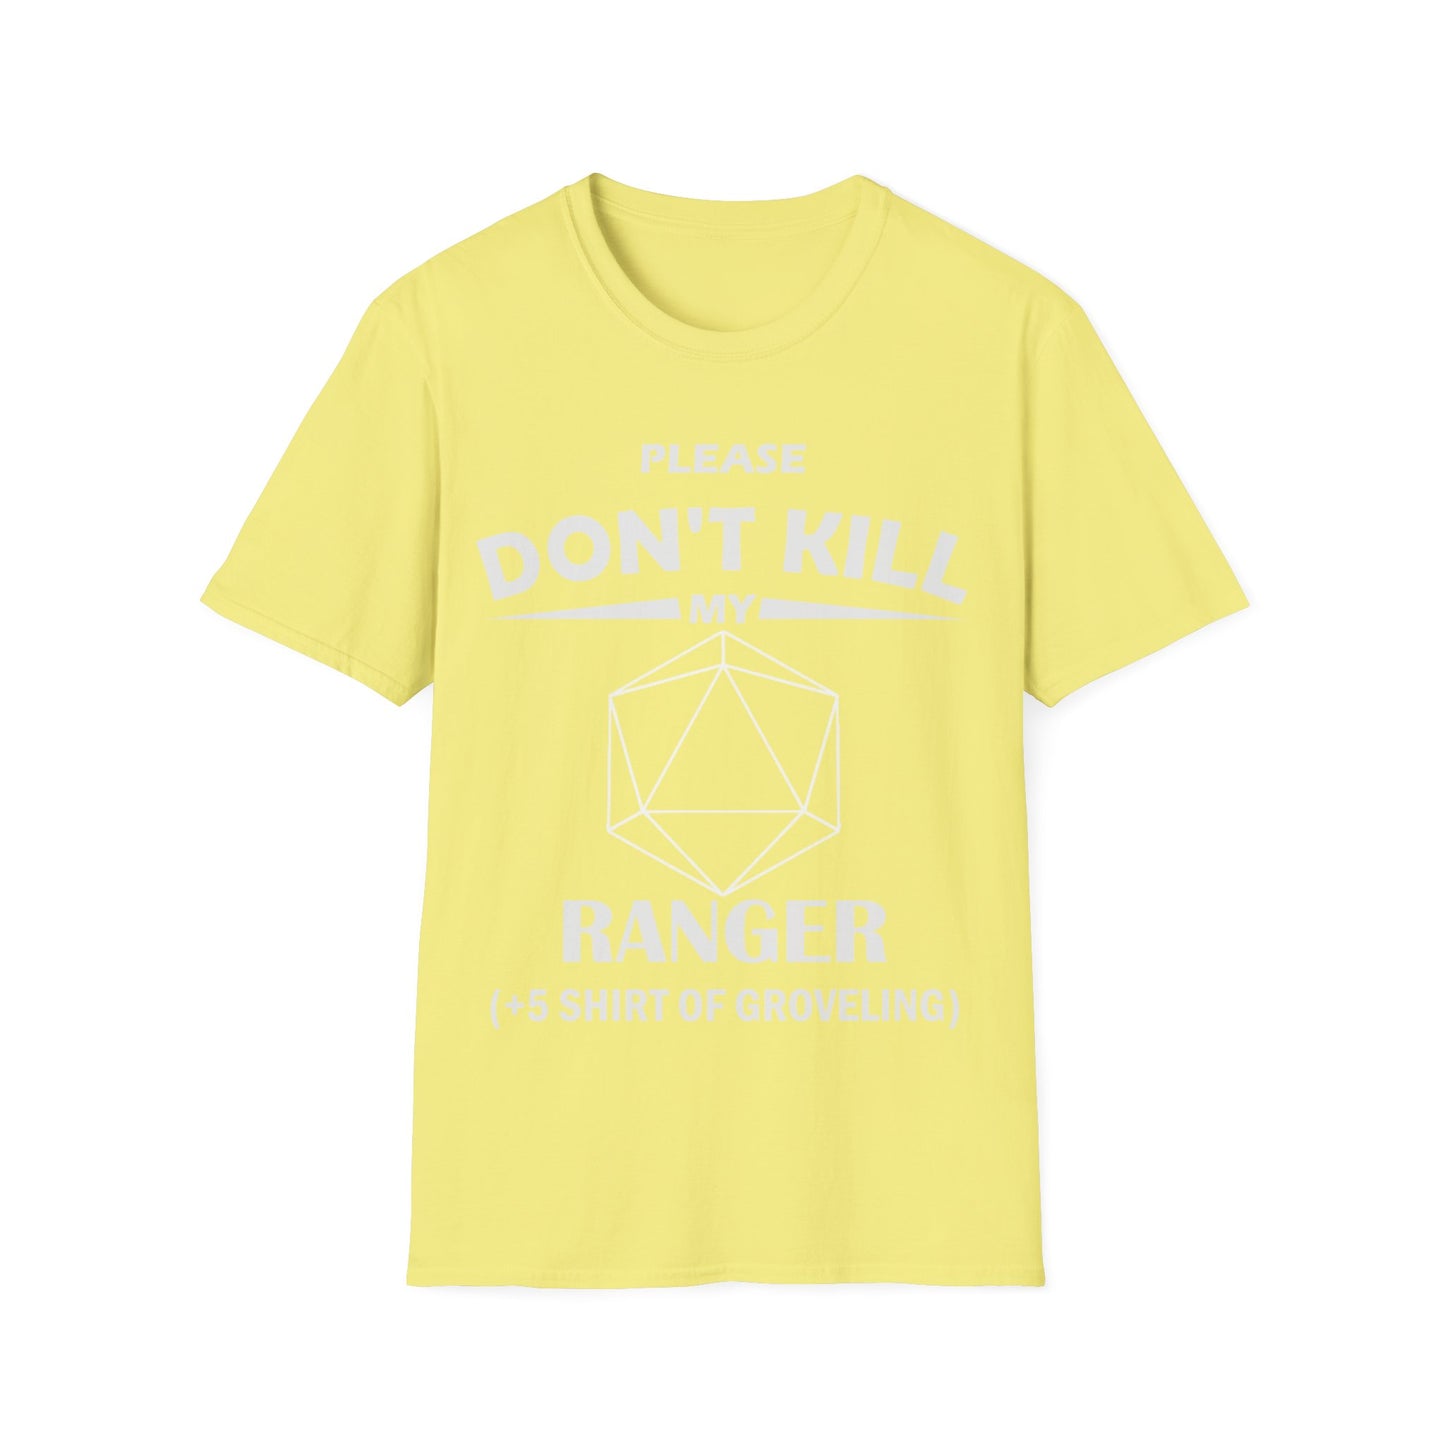 Please Don't Kill My Ranger - White - Unisex Softstyle T-Shirt